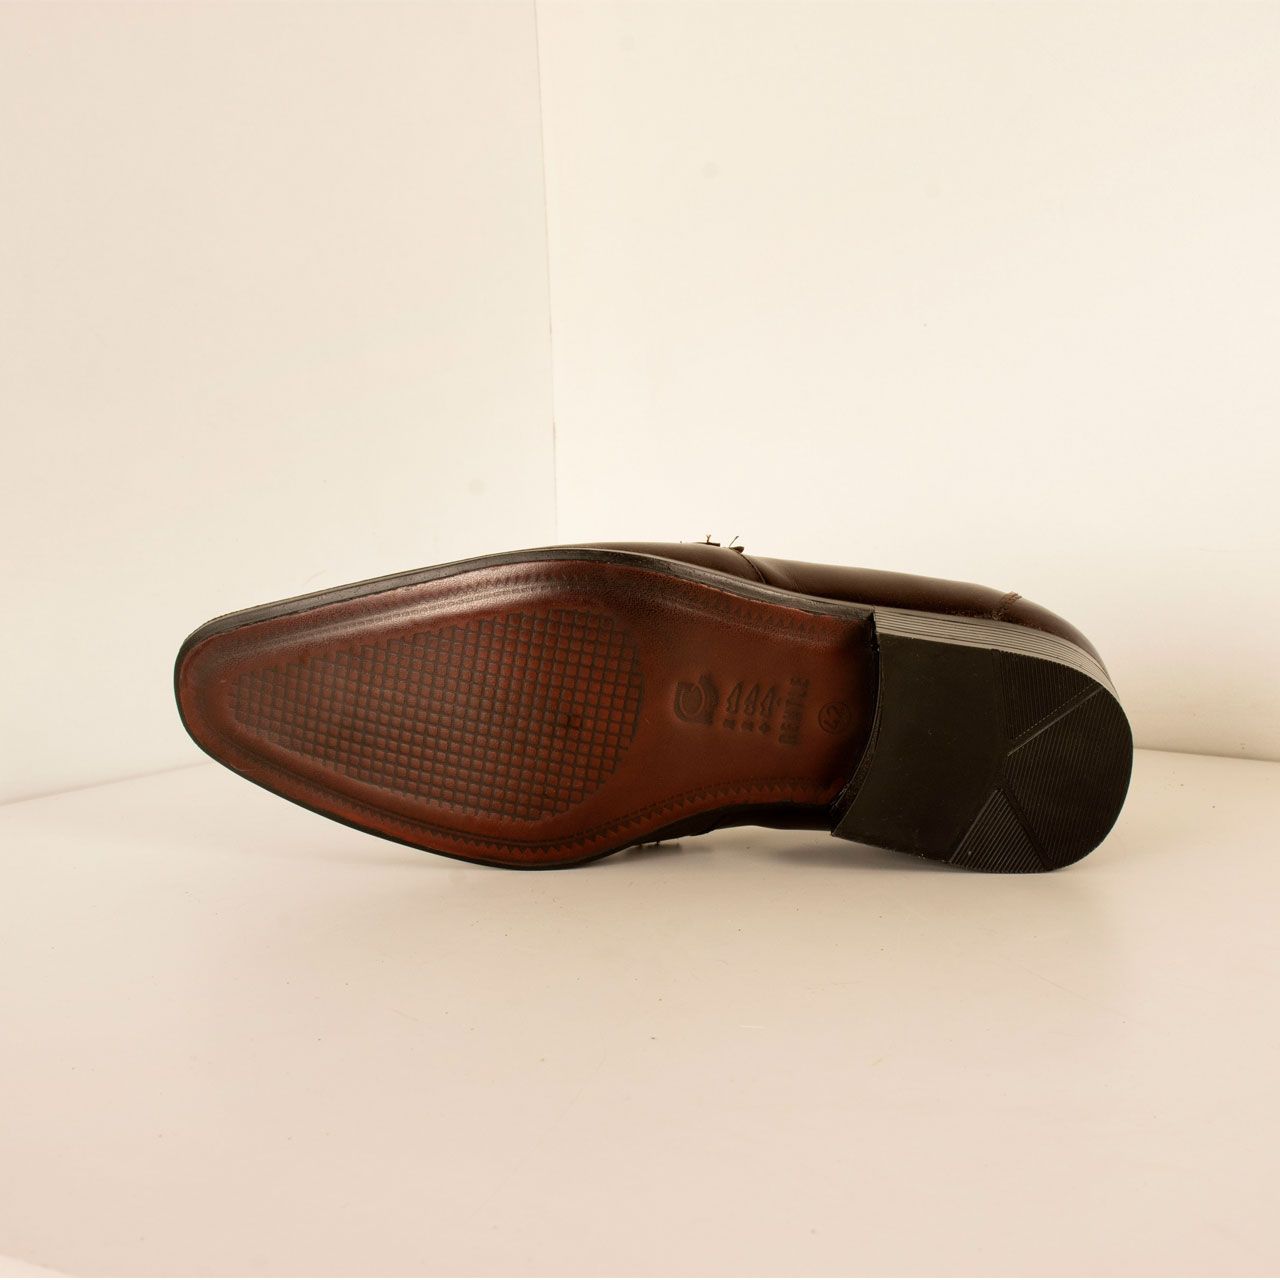  کفش مردانه پارینه چرم مدل SHO193-7 -  - 2